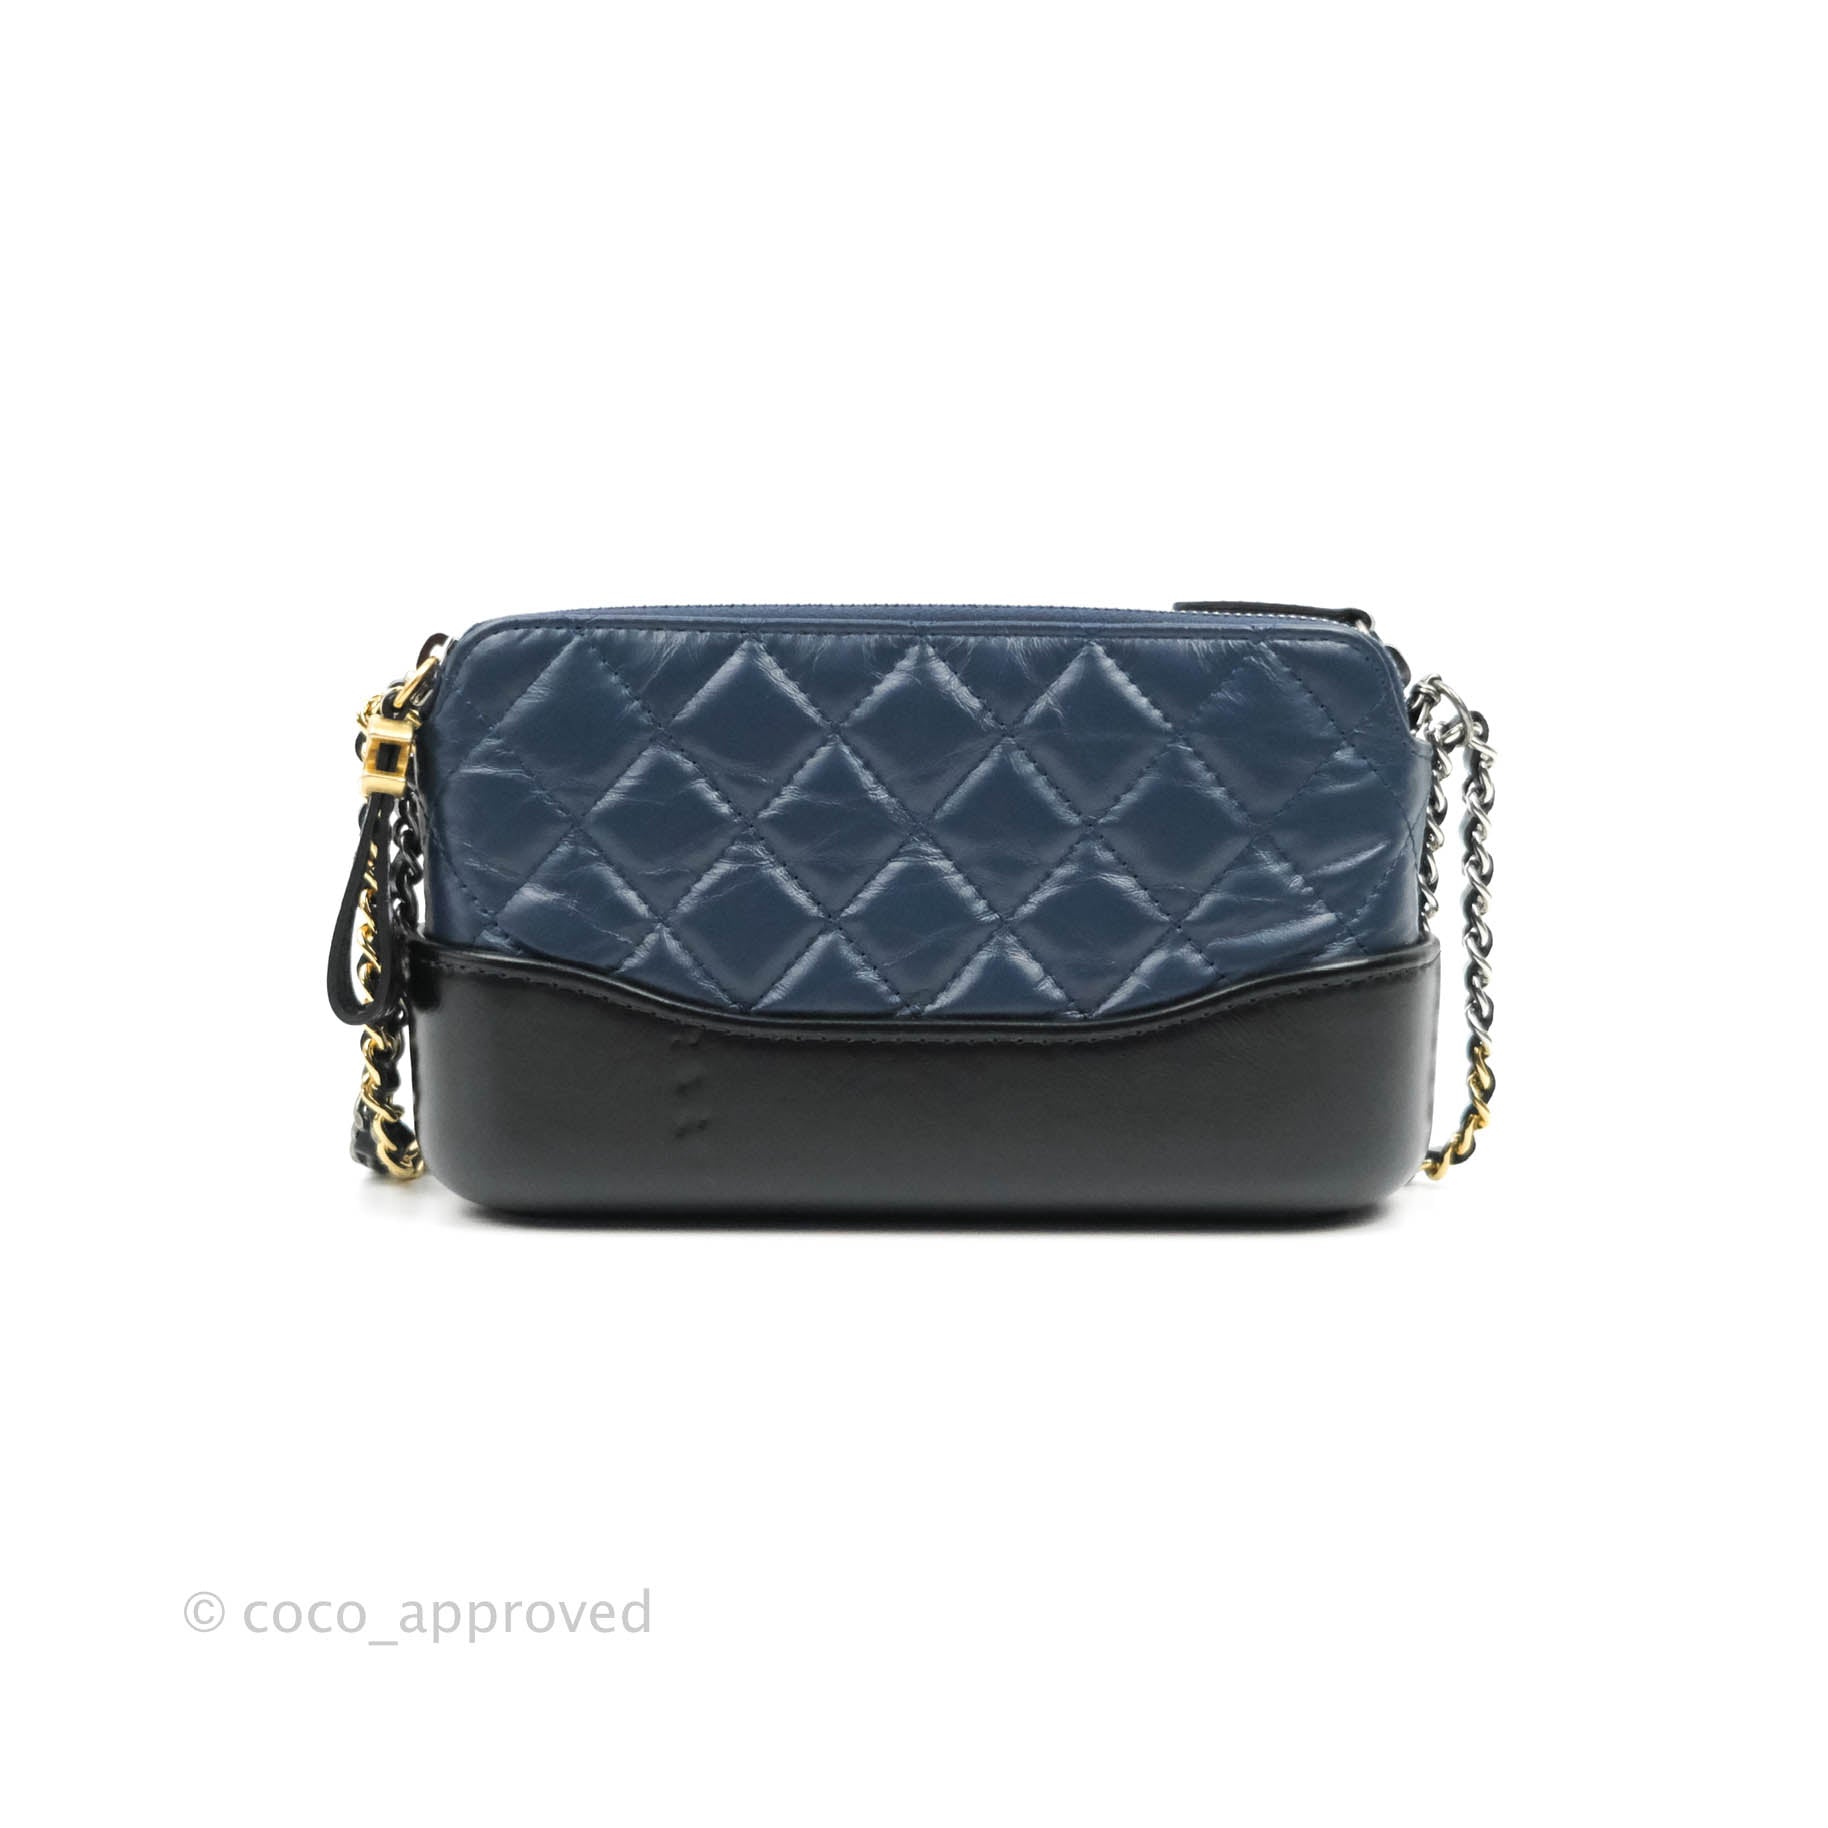 Chanel Blue Gabrielle Clutch Bag